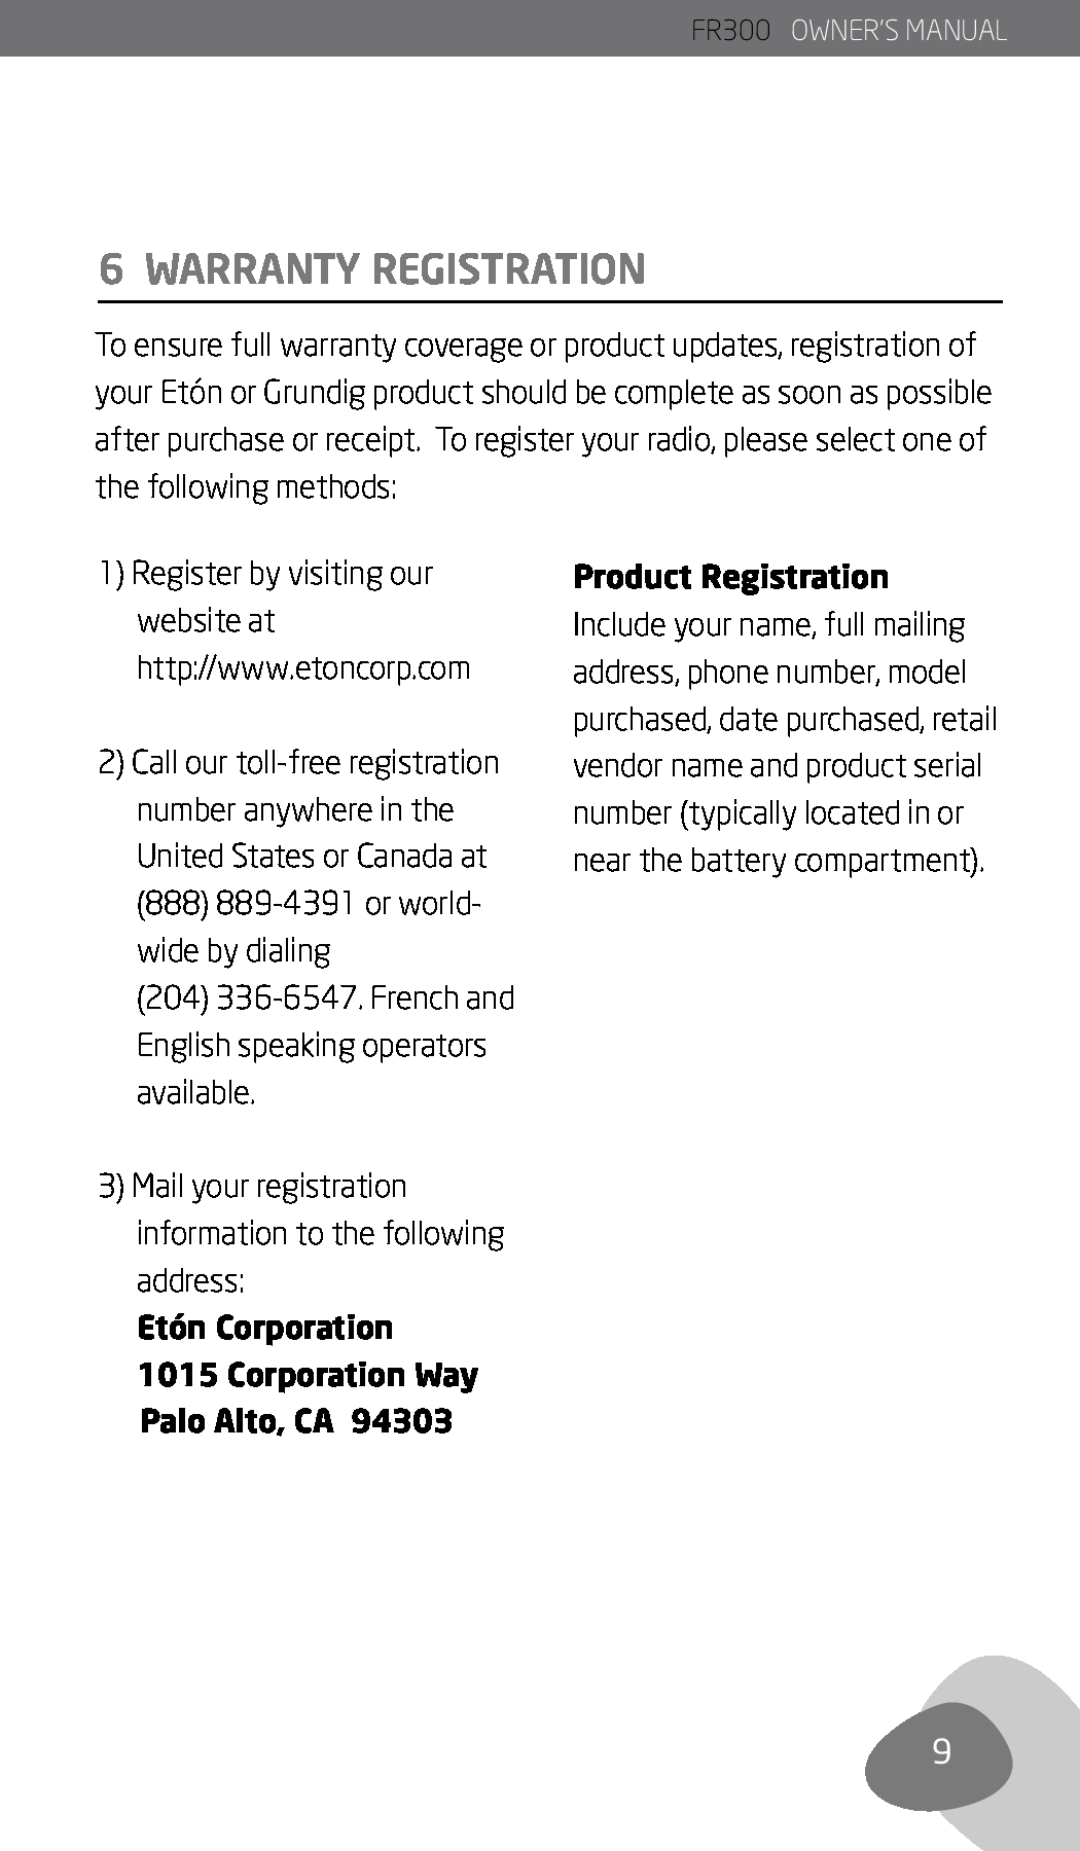 Eton FR300 owner manual Warranty Registration, Etón Corporation, Corporation Way Palo Alto, CA, Product Registration 